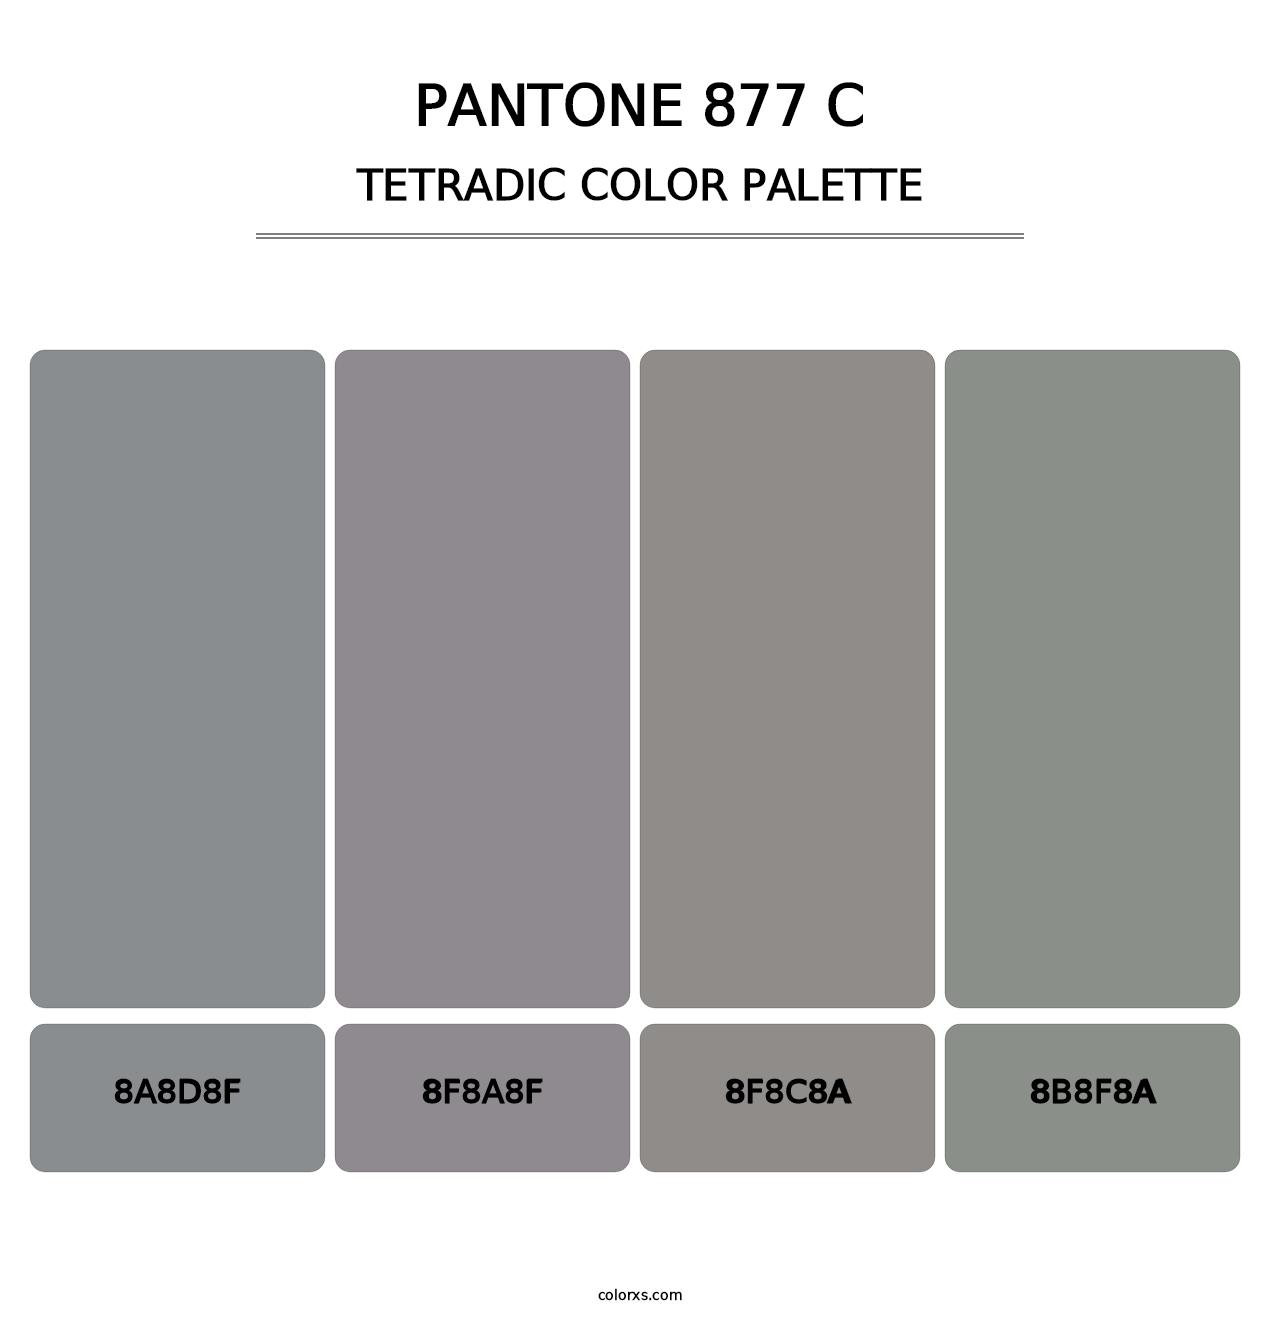 PANTONE 877 C - Tetradic Color Palette